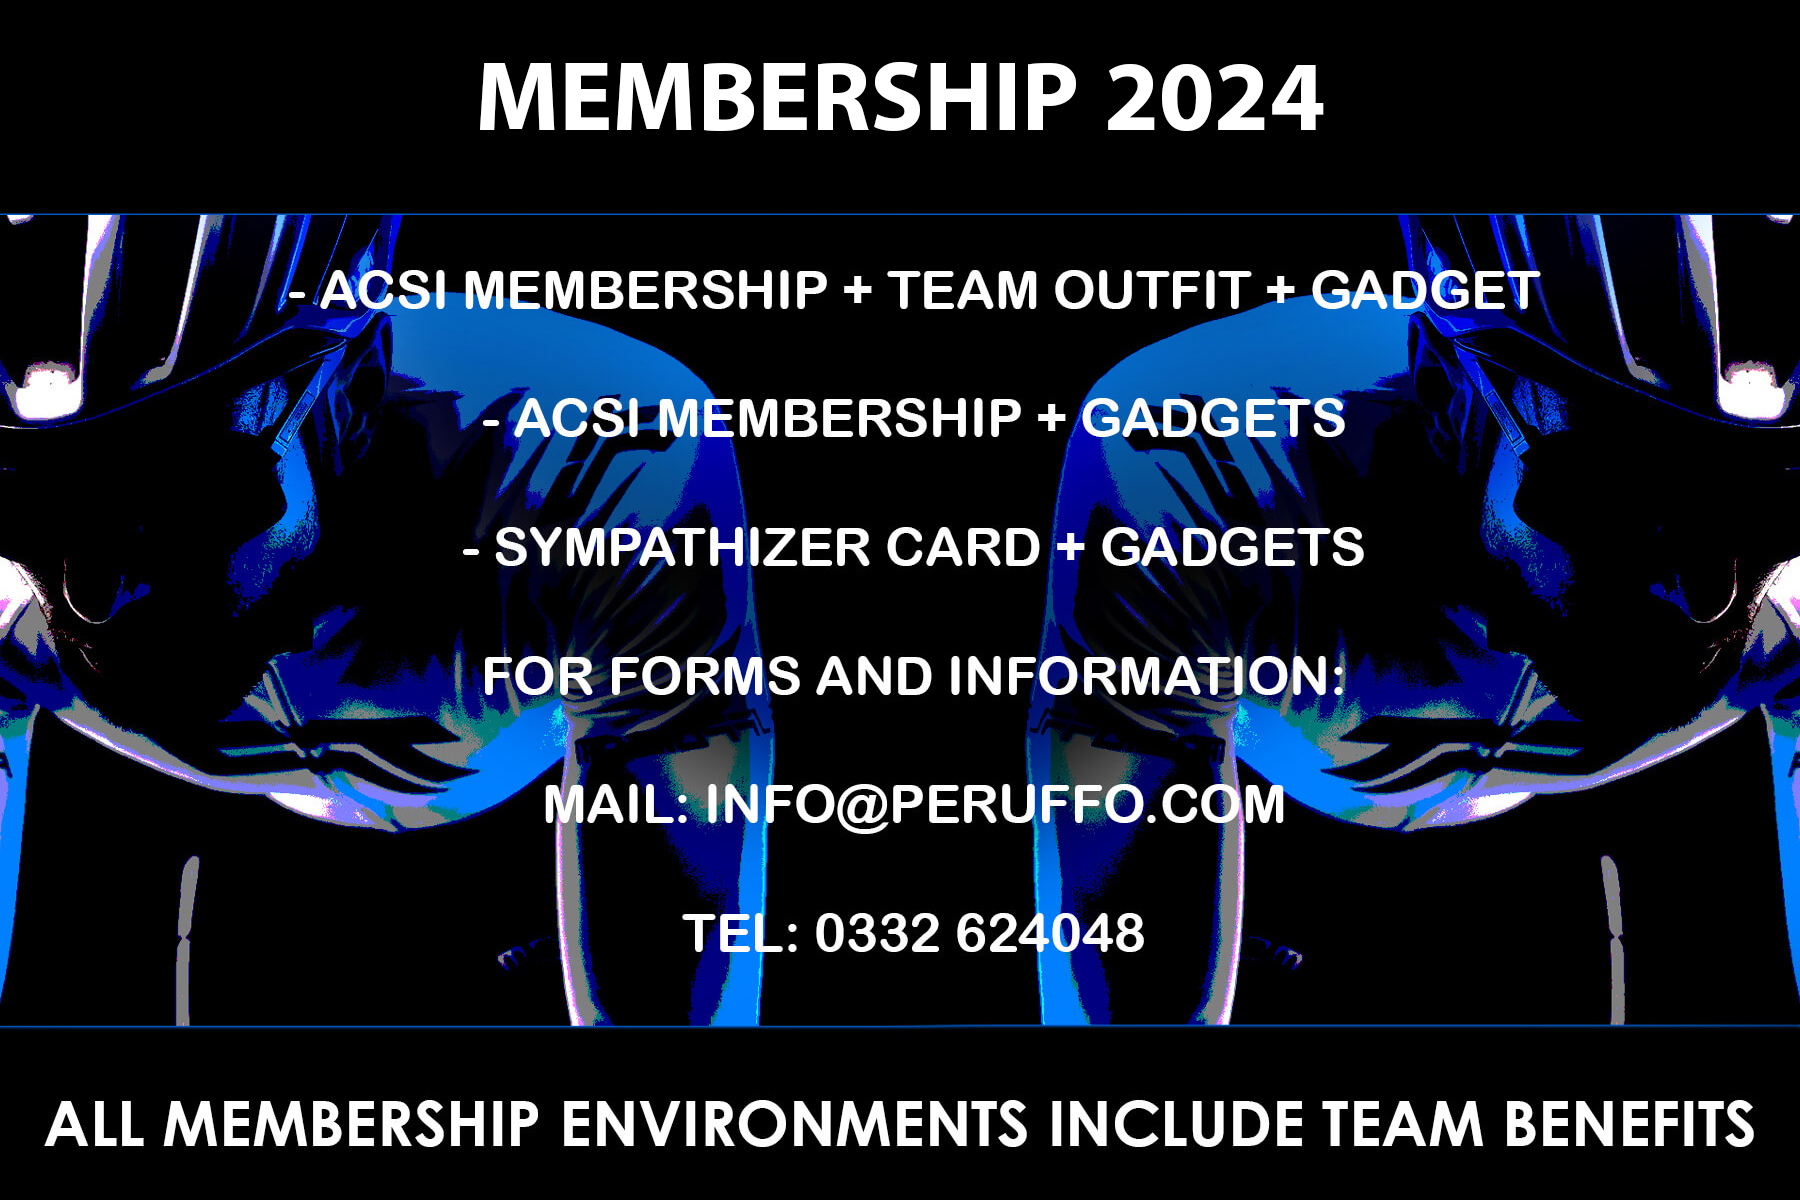 Membership TeamPeruffo 2024 - Peruffo Cicli